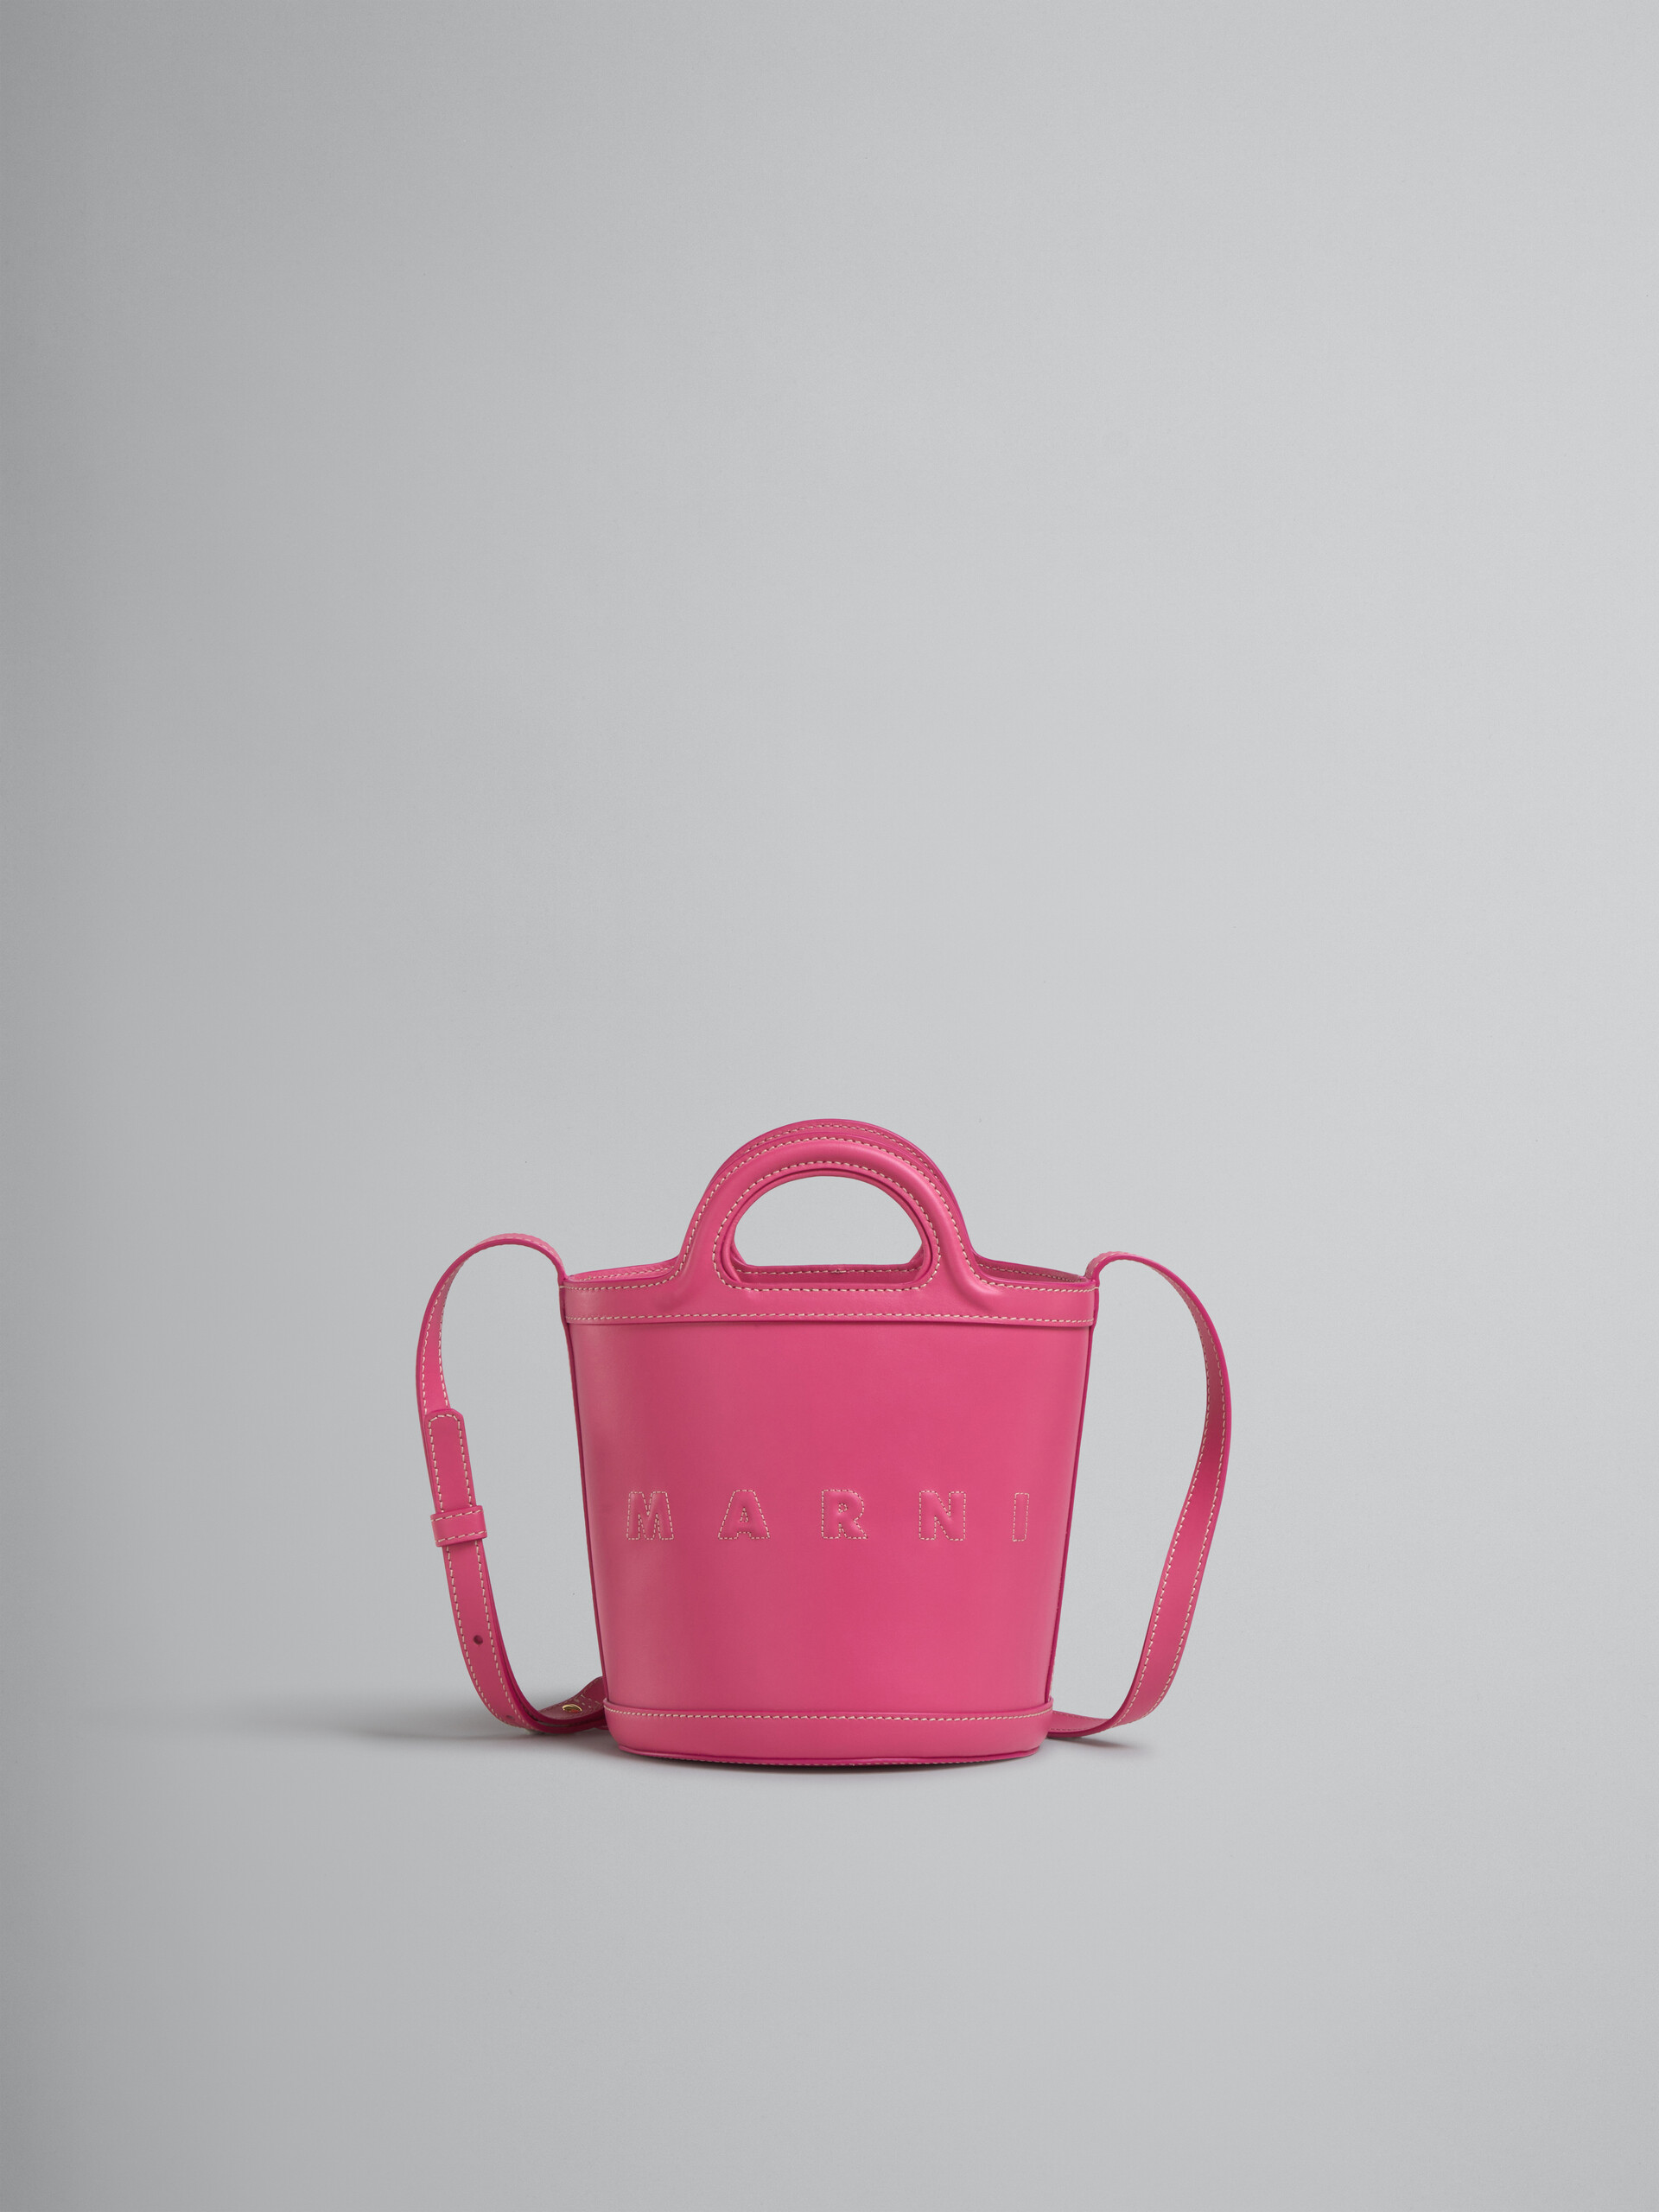 Tropicalia Small Bucket Bag in pink leather | Marni